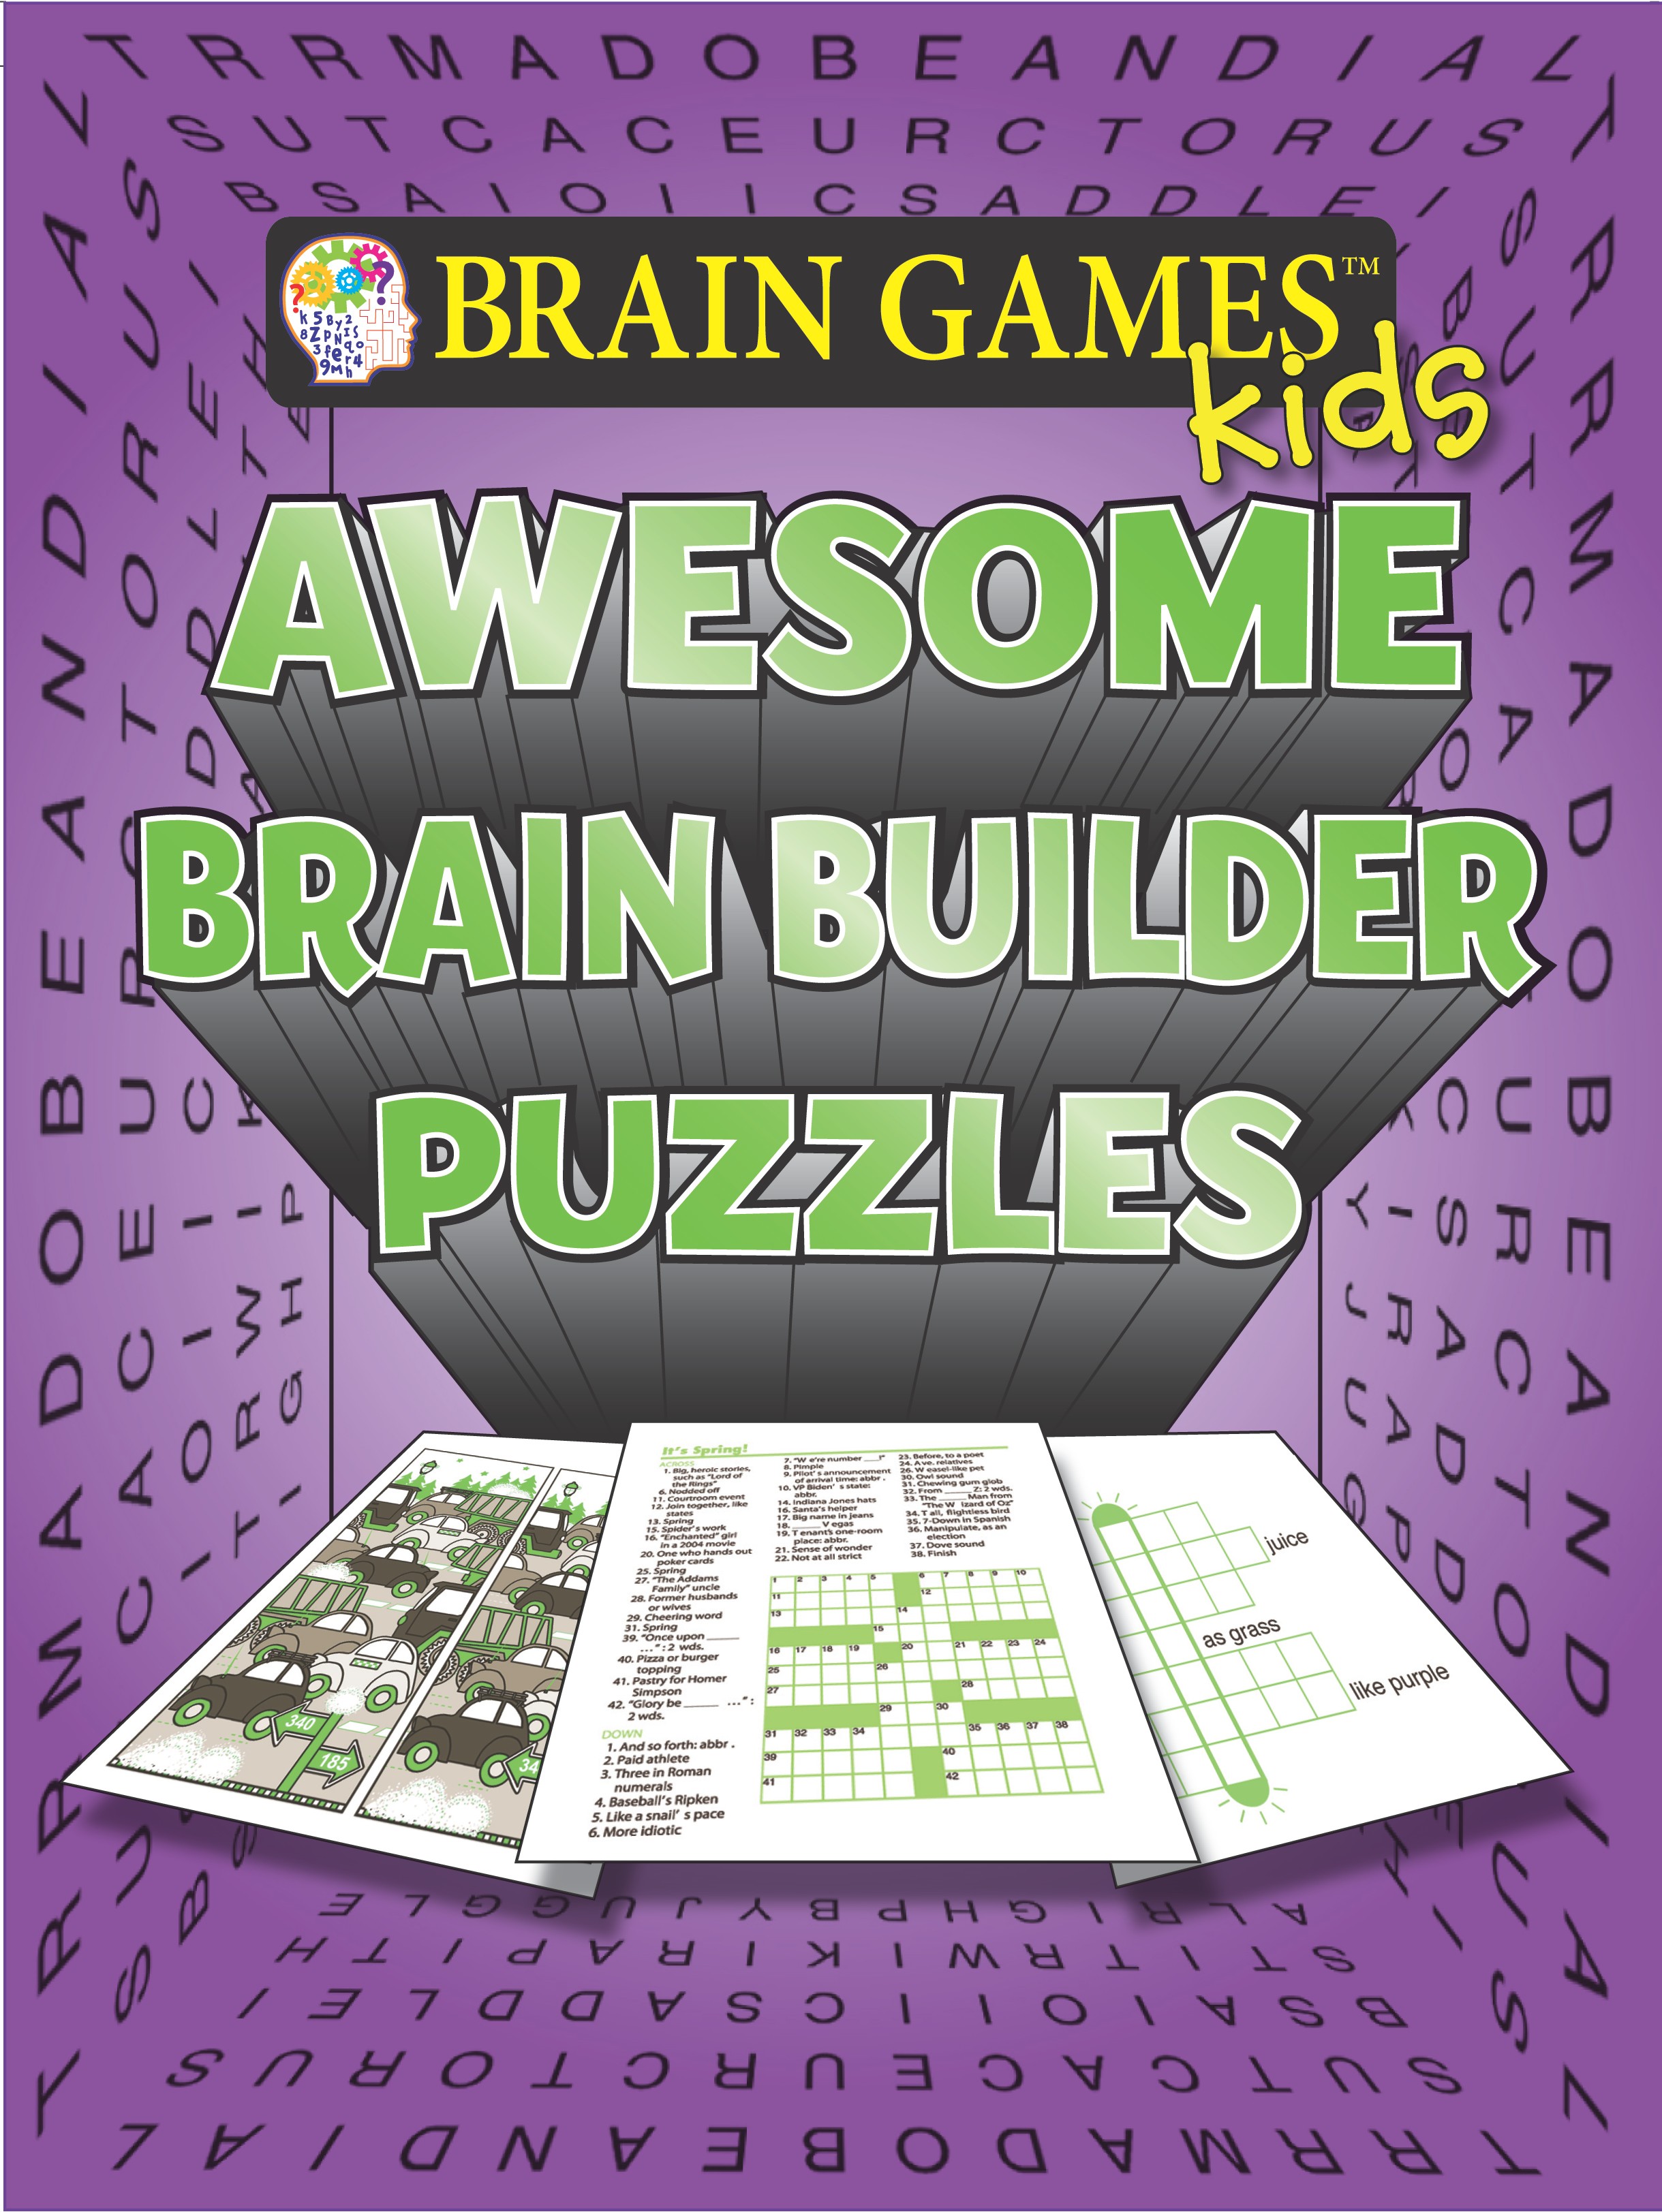 brain games bible puzzle book